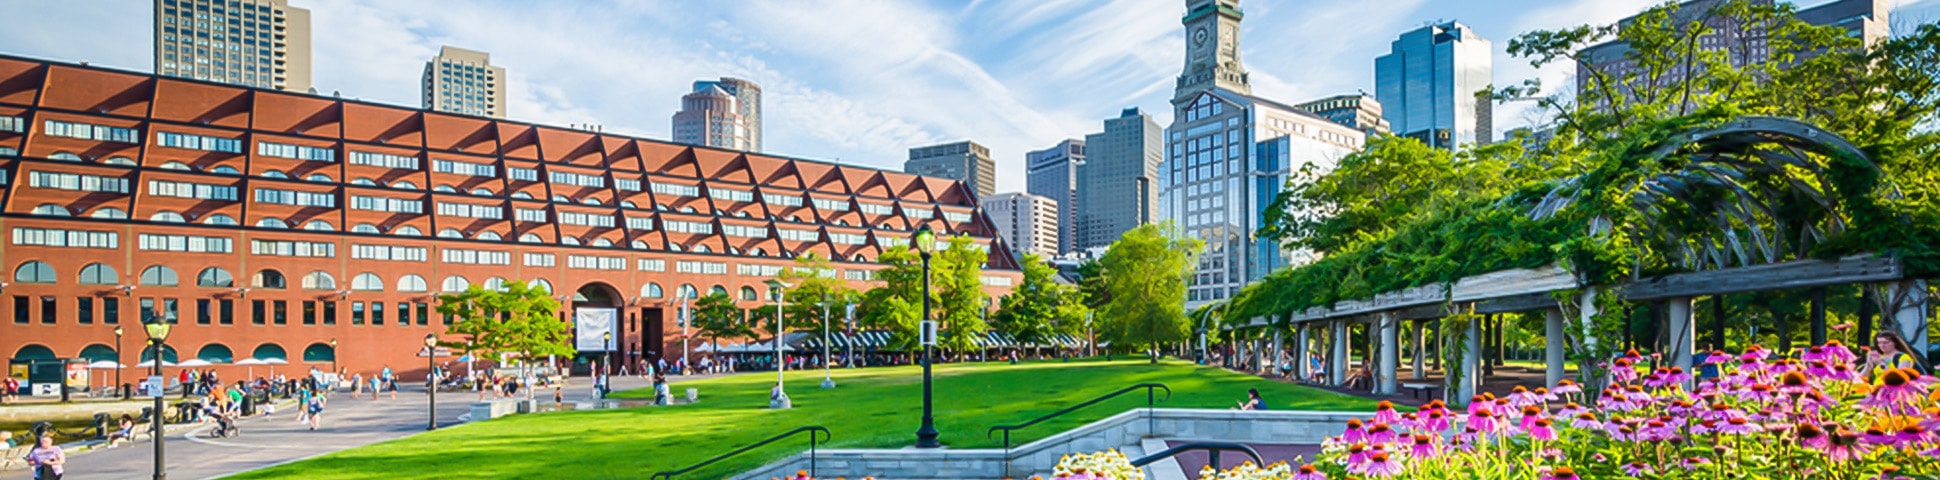 Best city walk trails in Boston, Massachusetts